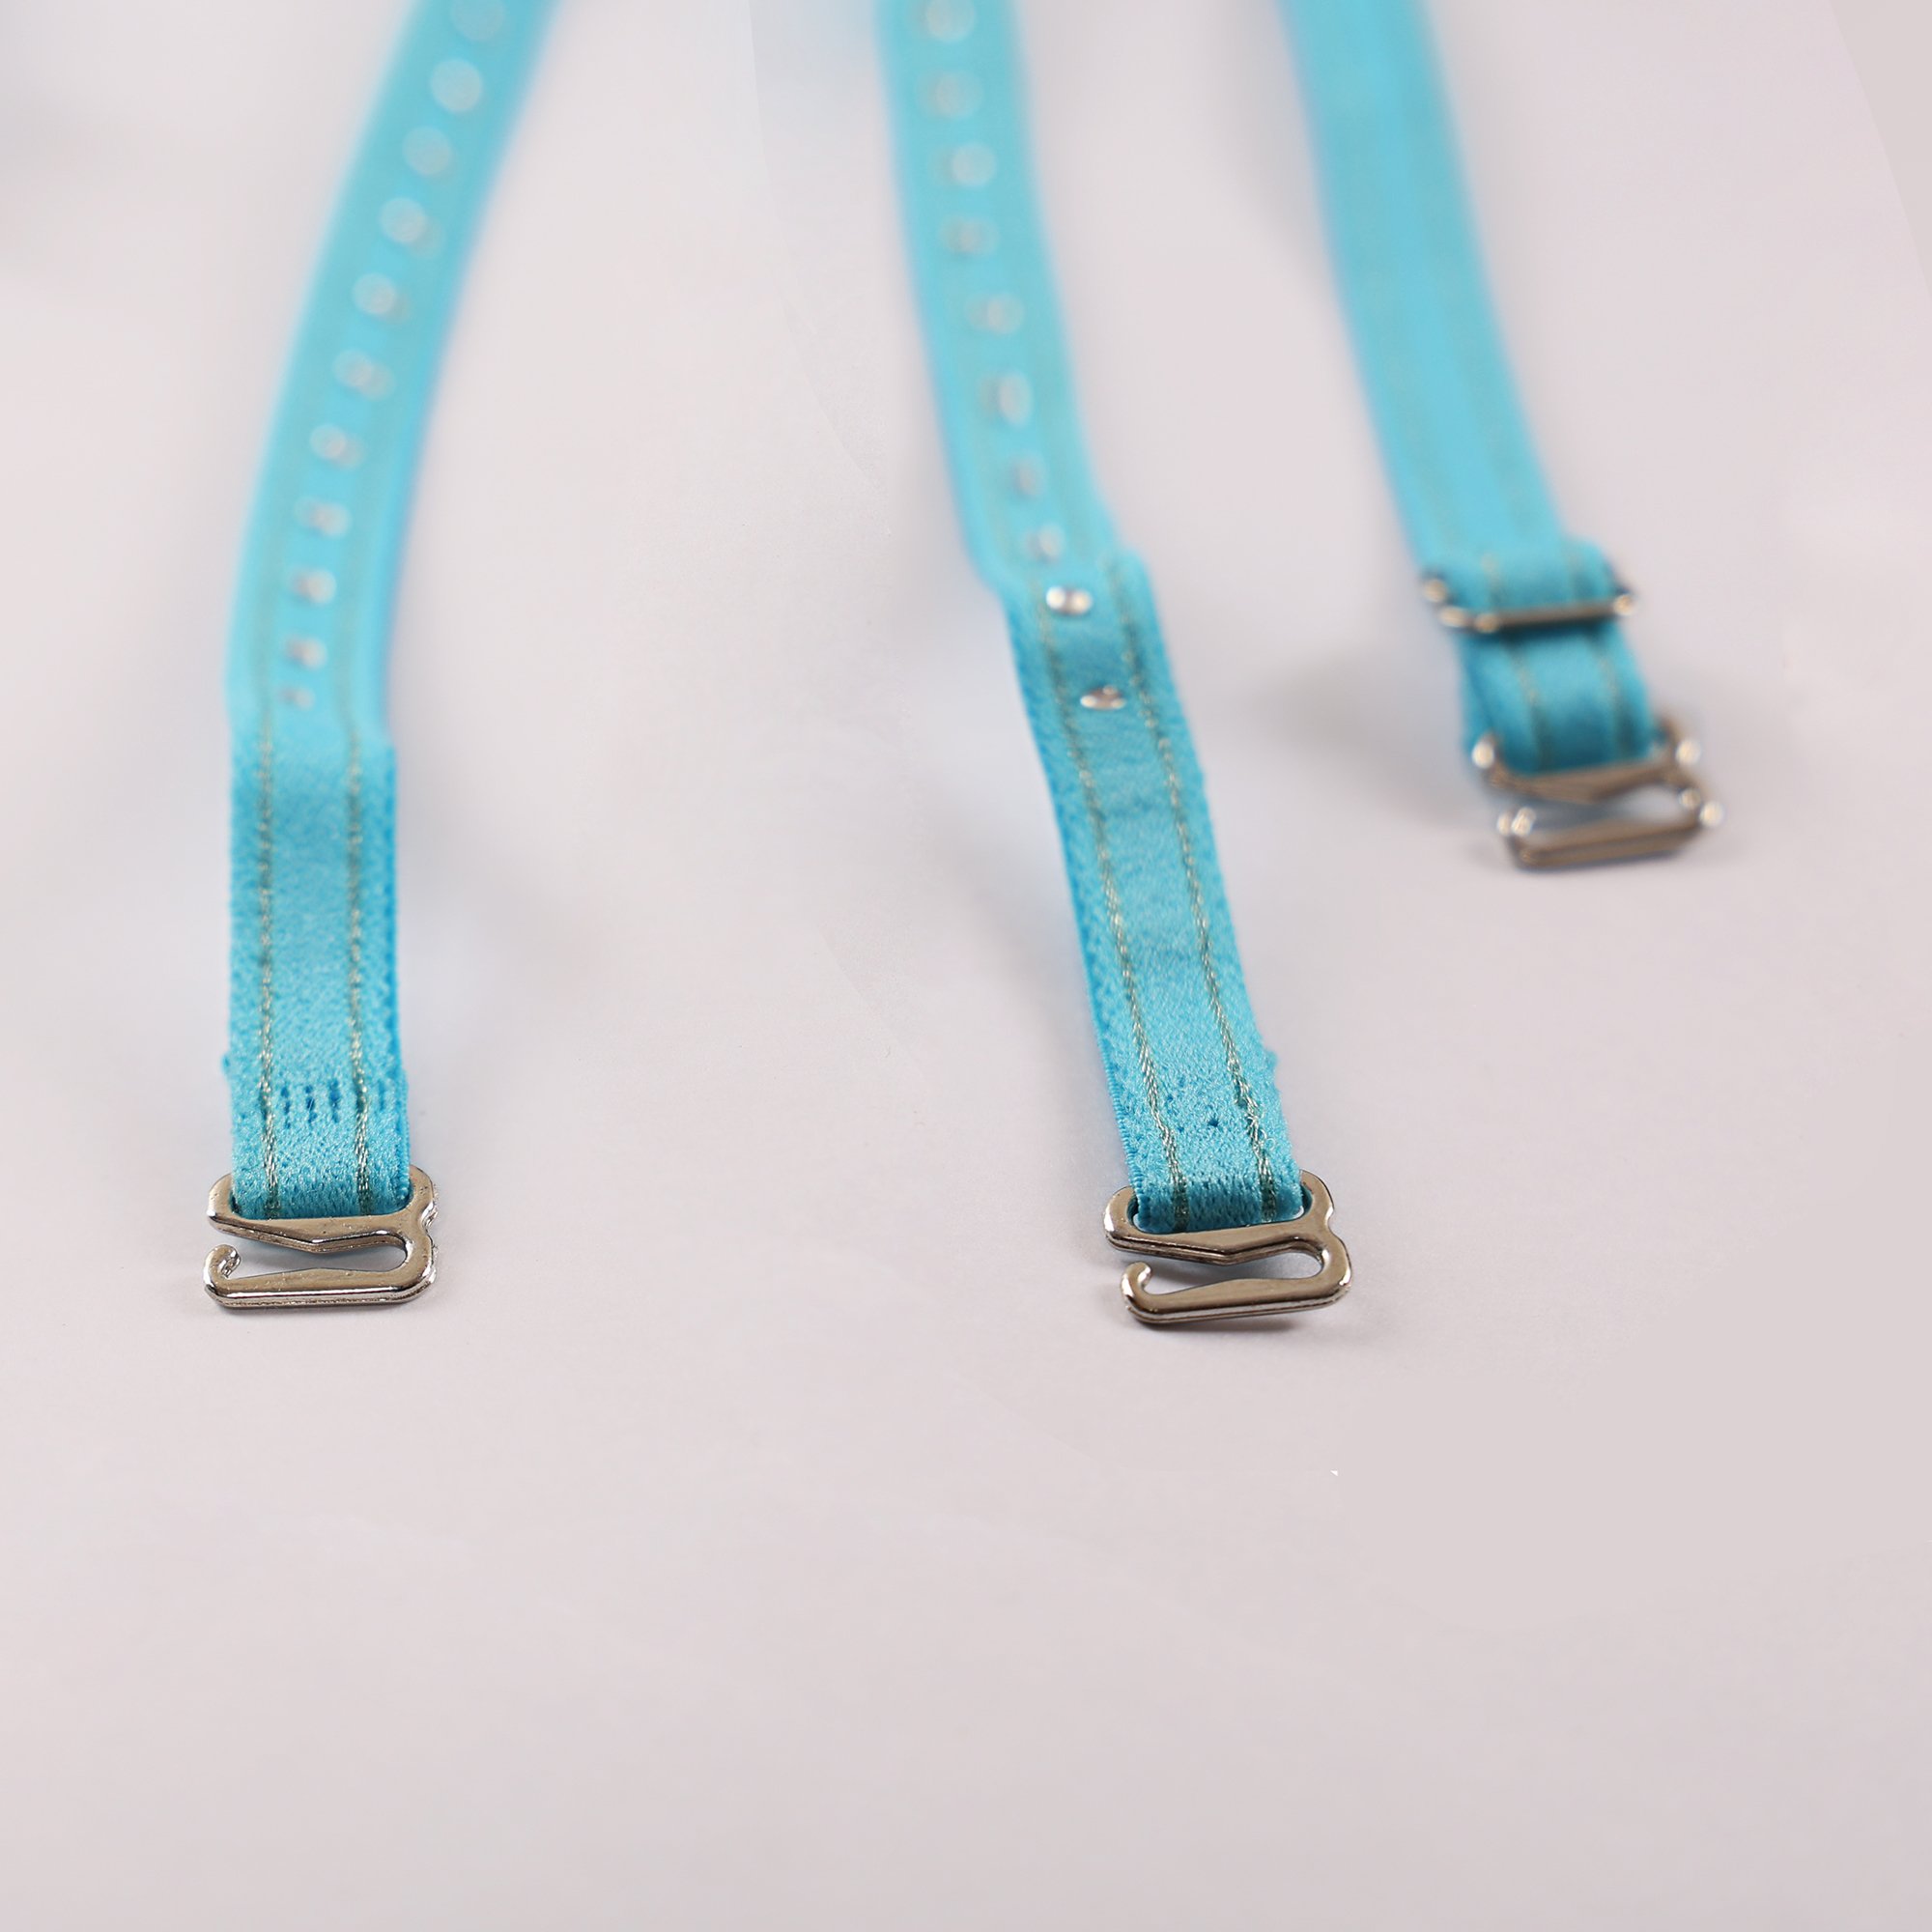 Licogel Bra Straps Replacement Adjustable - Decorative Thin Removable  String Bra Shoulder Strap Detachable Lingerie Straps